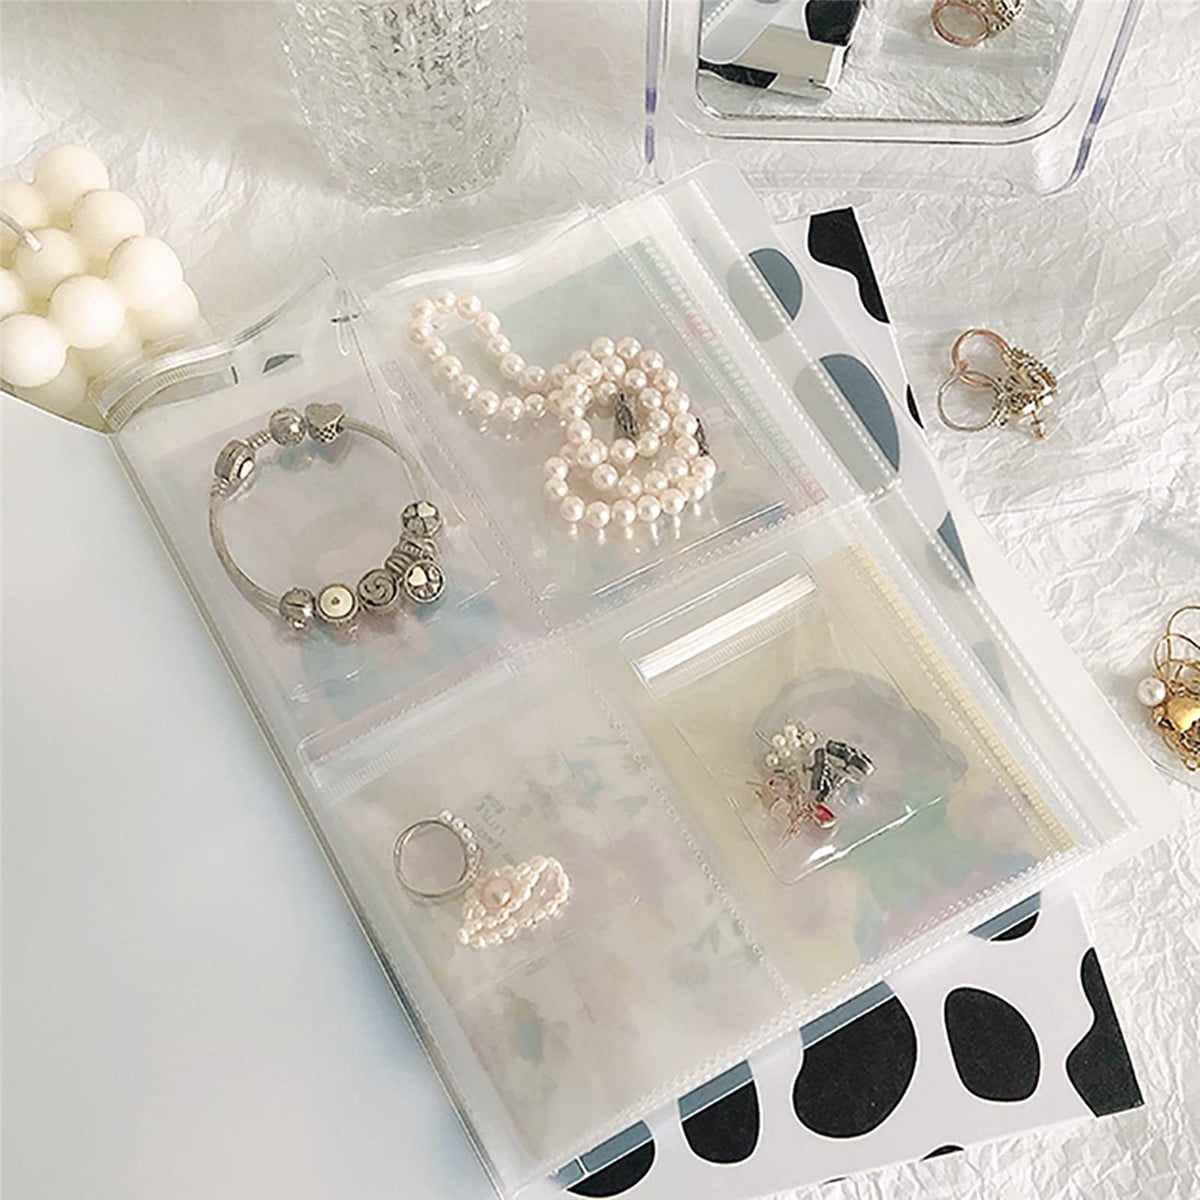 WarmHut Earrings Organizer Book, Small Portable Travel Jewelry Ear Studs  Holder Display Bag Case Box - Zen Merchandiser